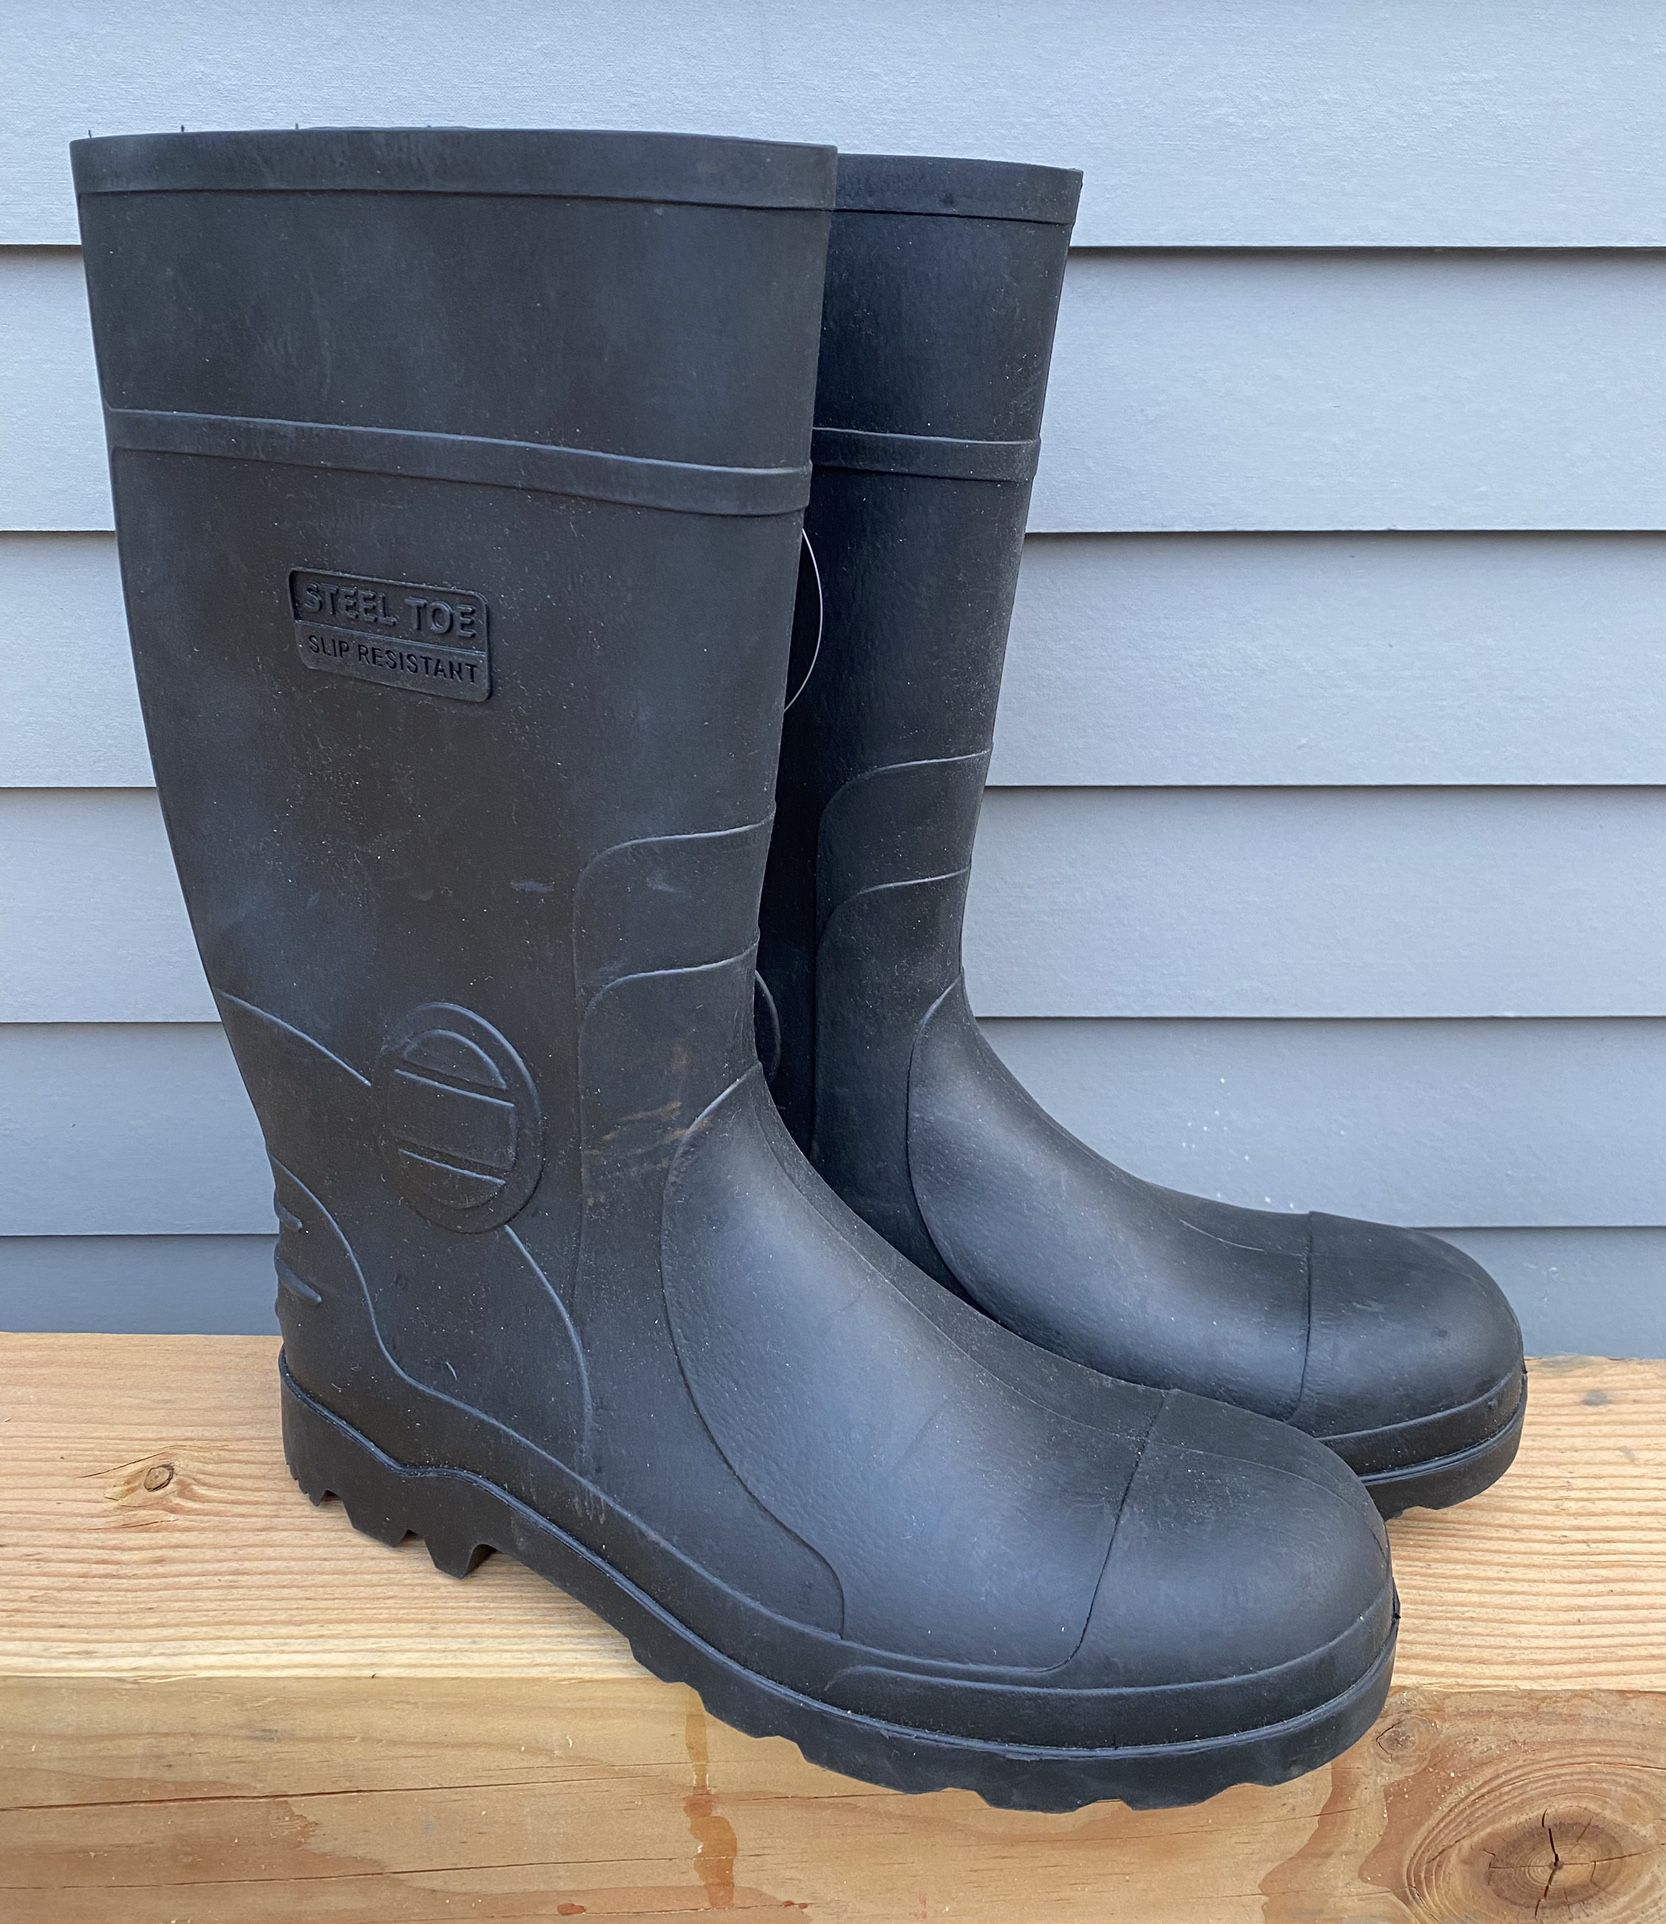 NEW Slip Resistant Steel Toe Black Quality Rubber Work Boots (Men’s Size 11) - $35